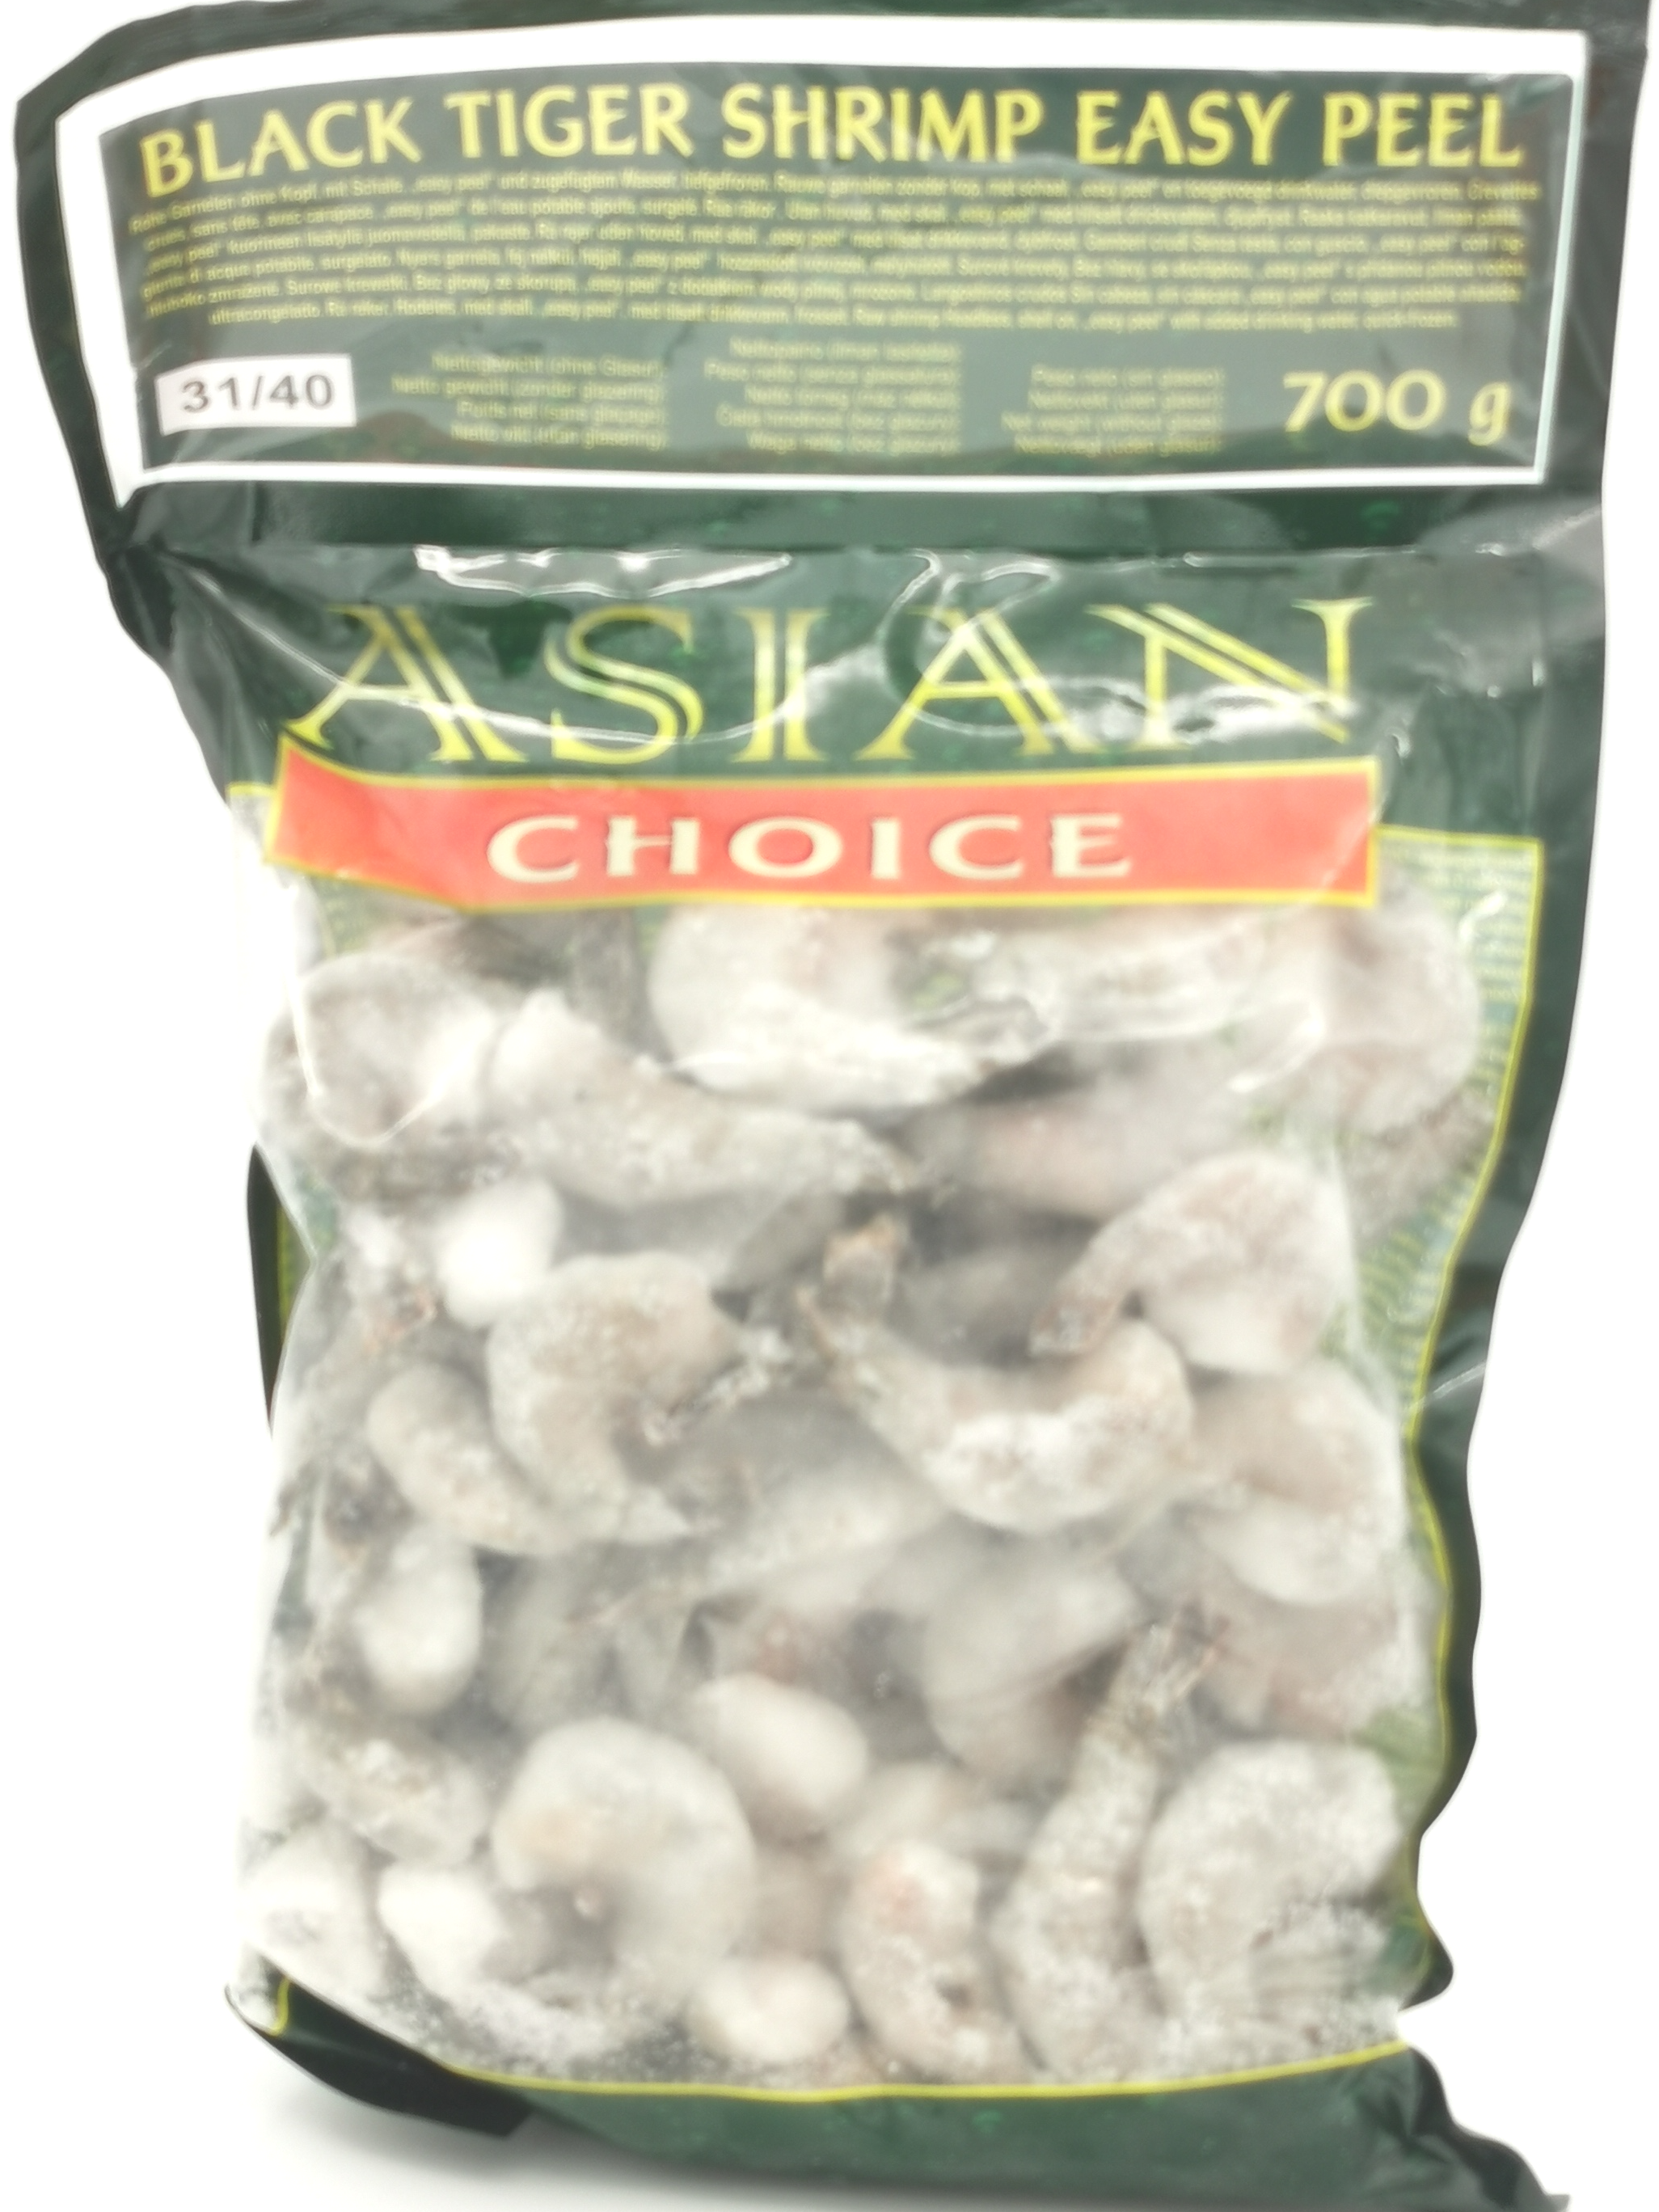 Asian Choice 无头黑虎虾 31/40 700g